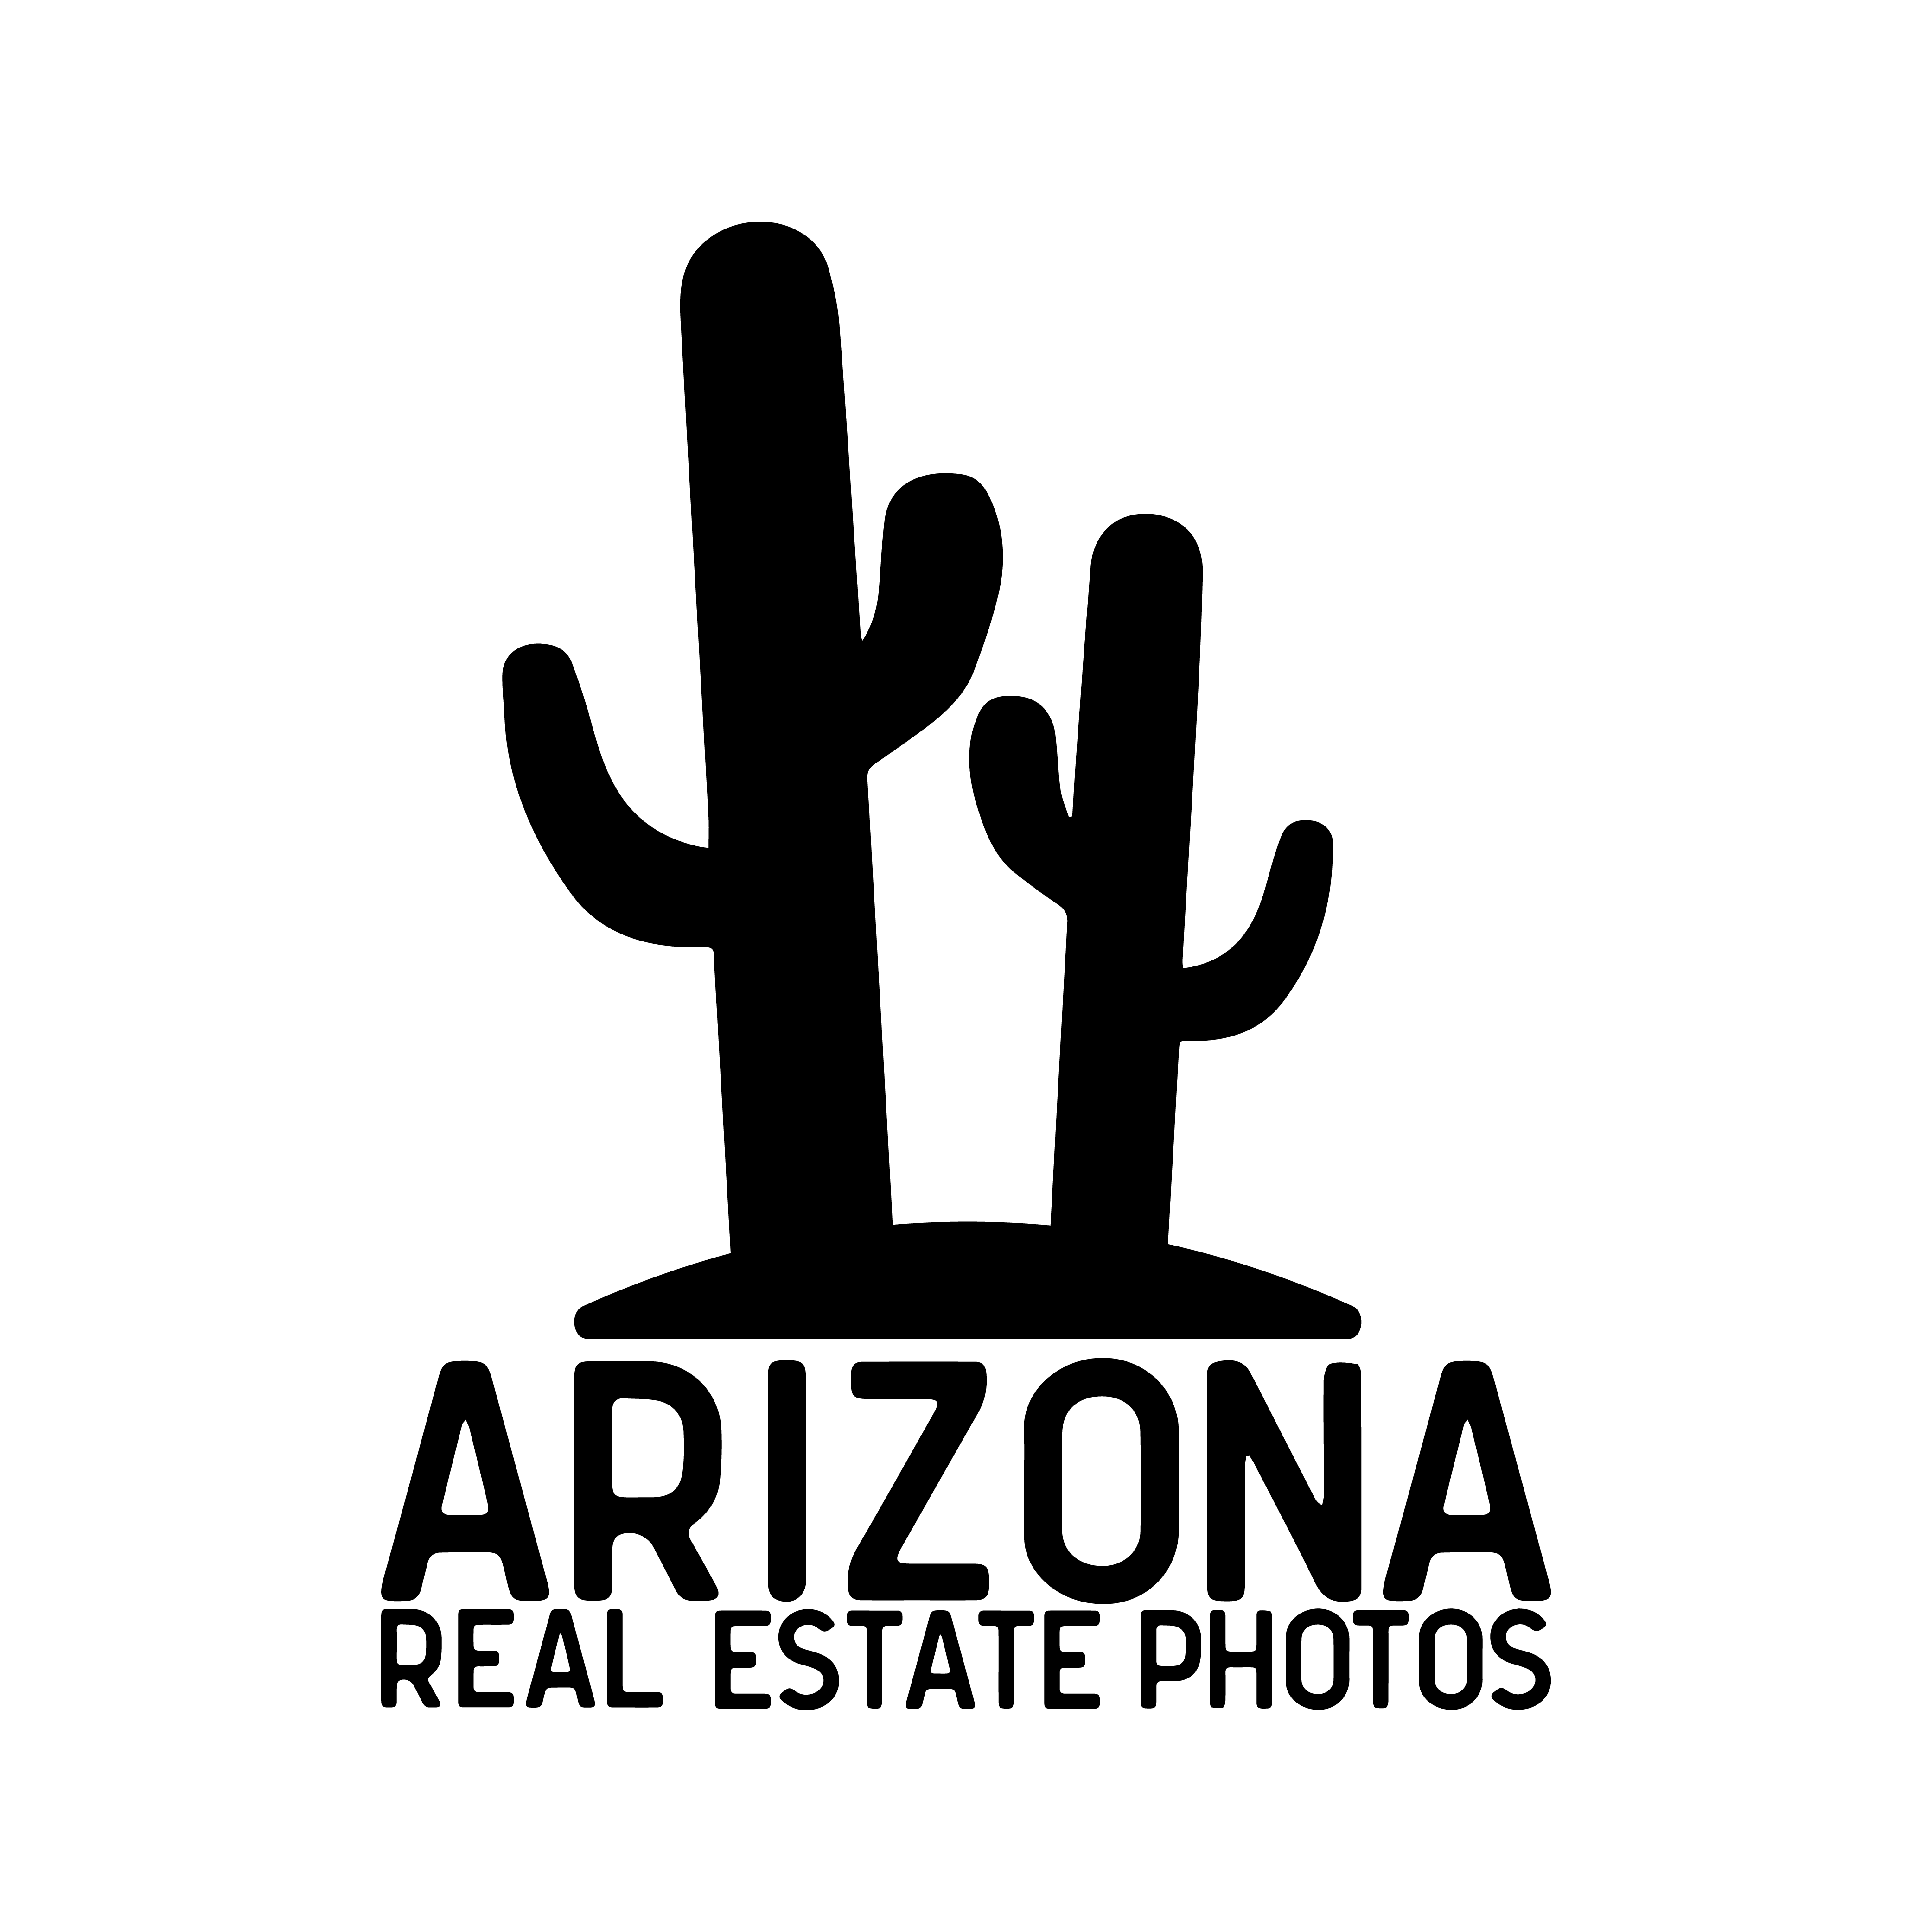 Arizona Real Estate Photos logo